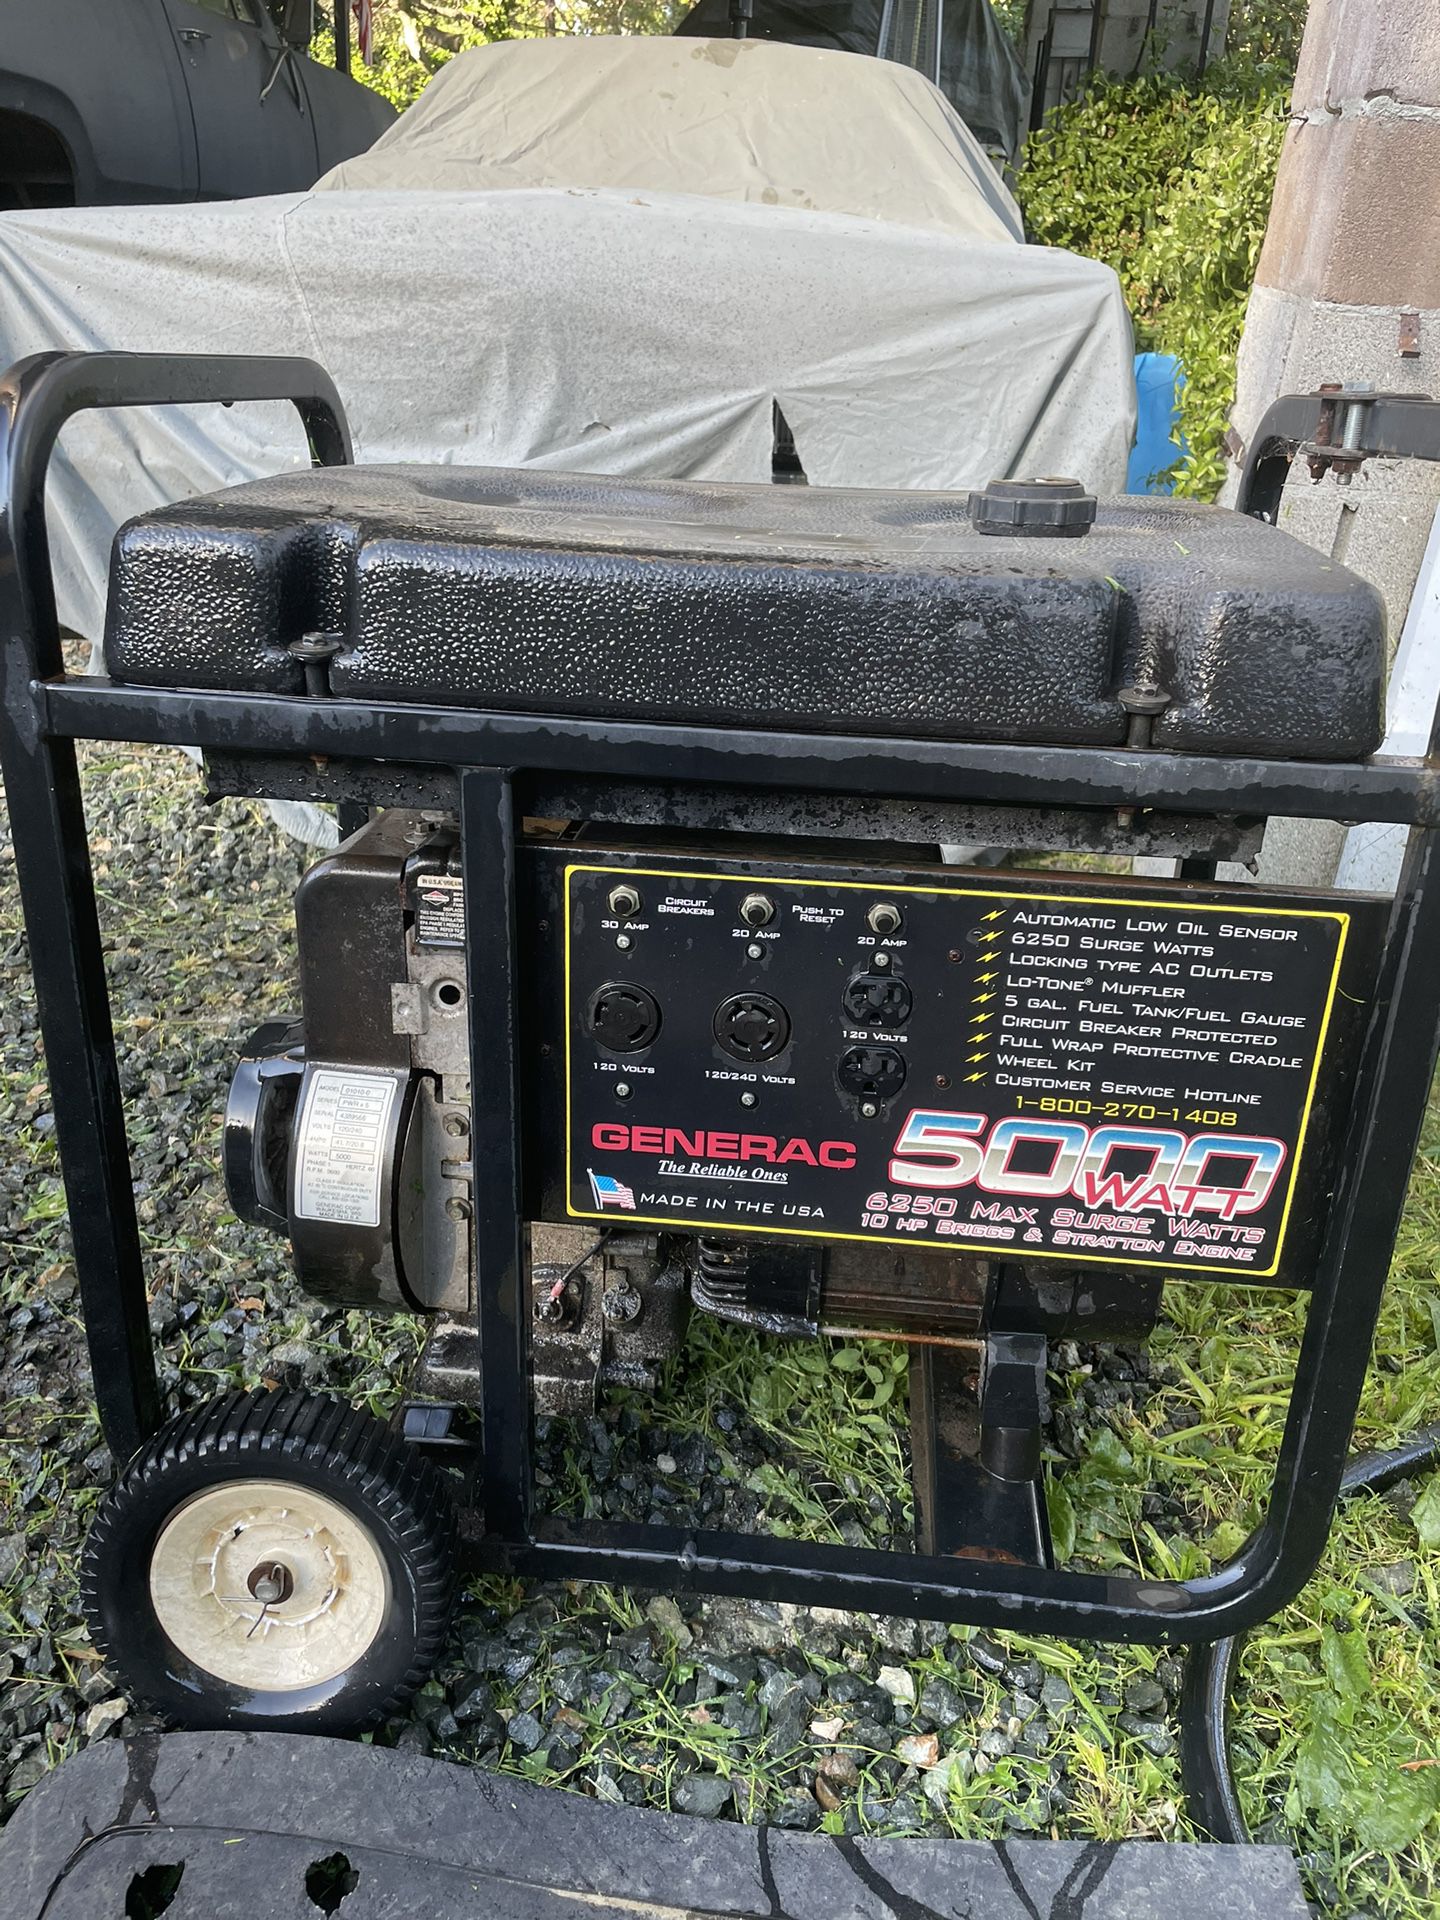 Generator 